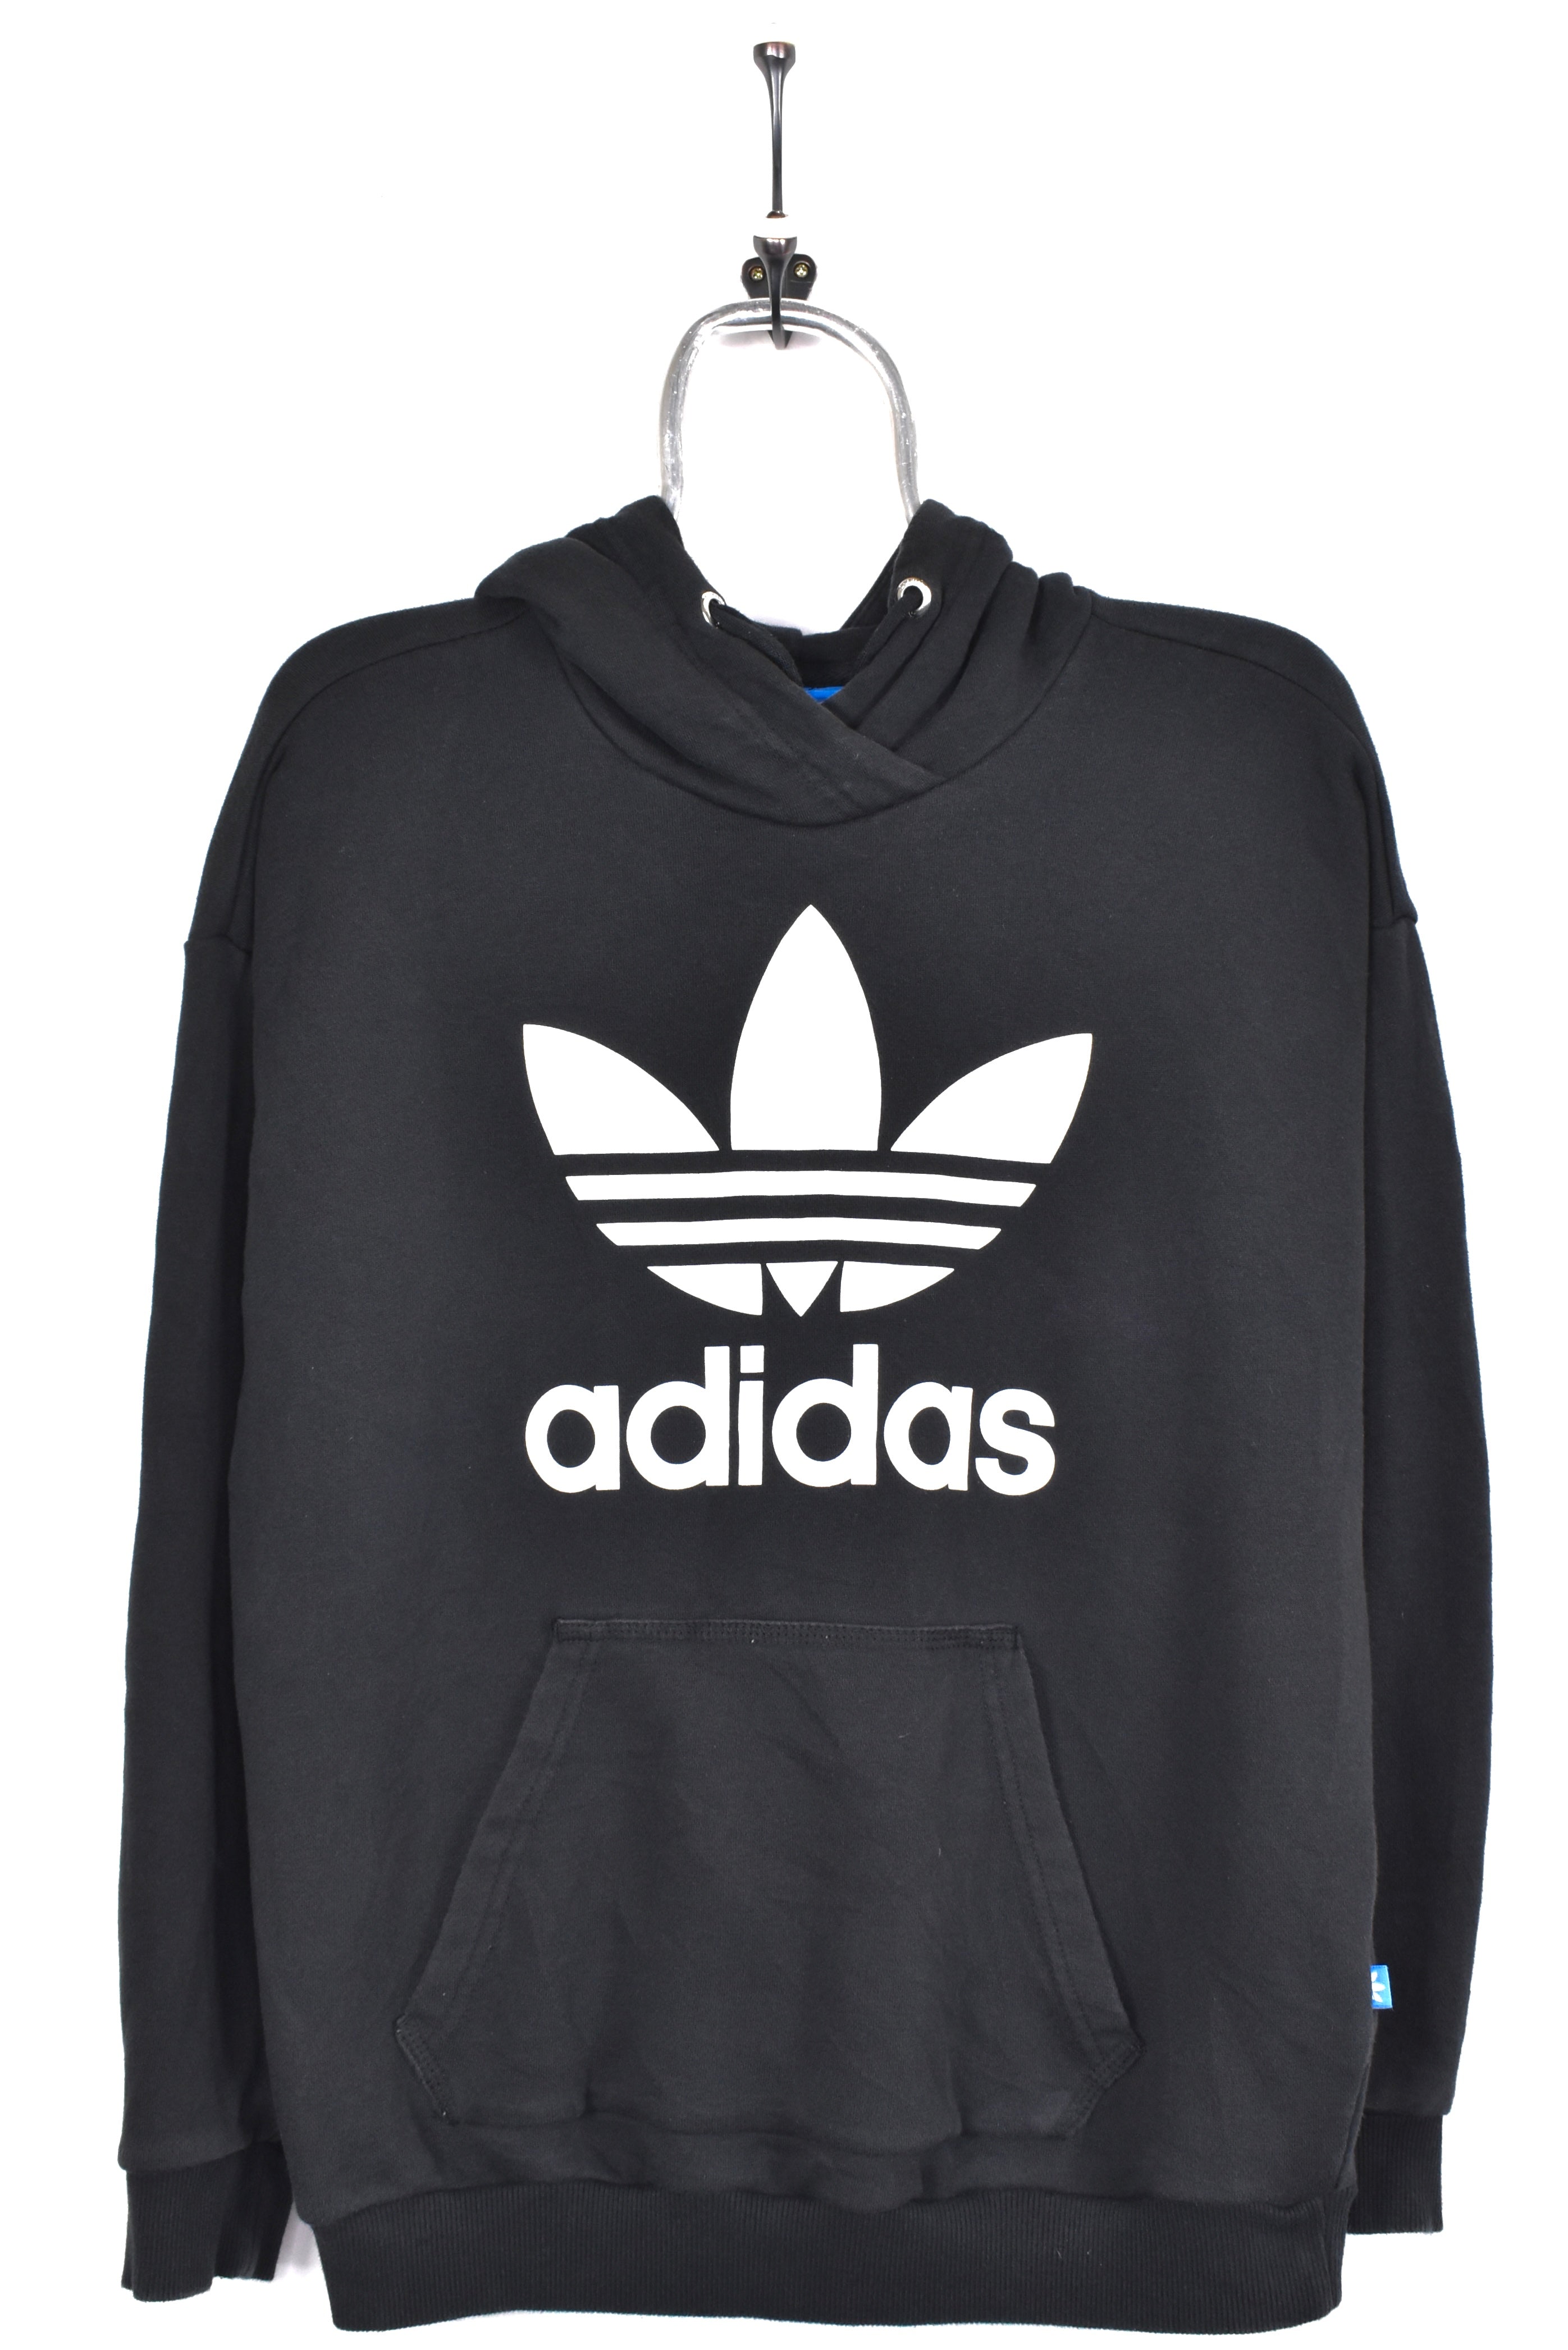 Modern Adidas hoodie, black graphic sweatshirt - AU Small ADIDAS